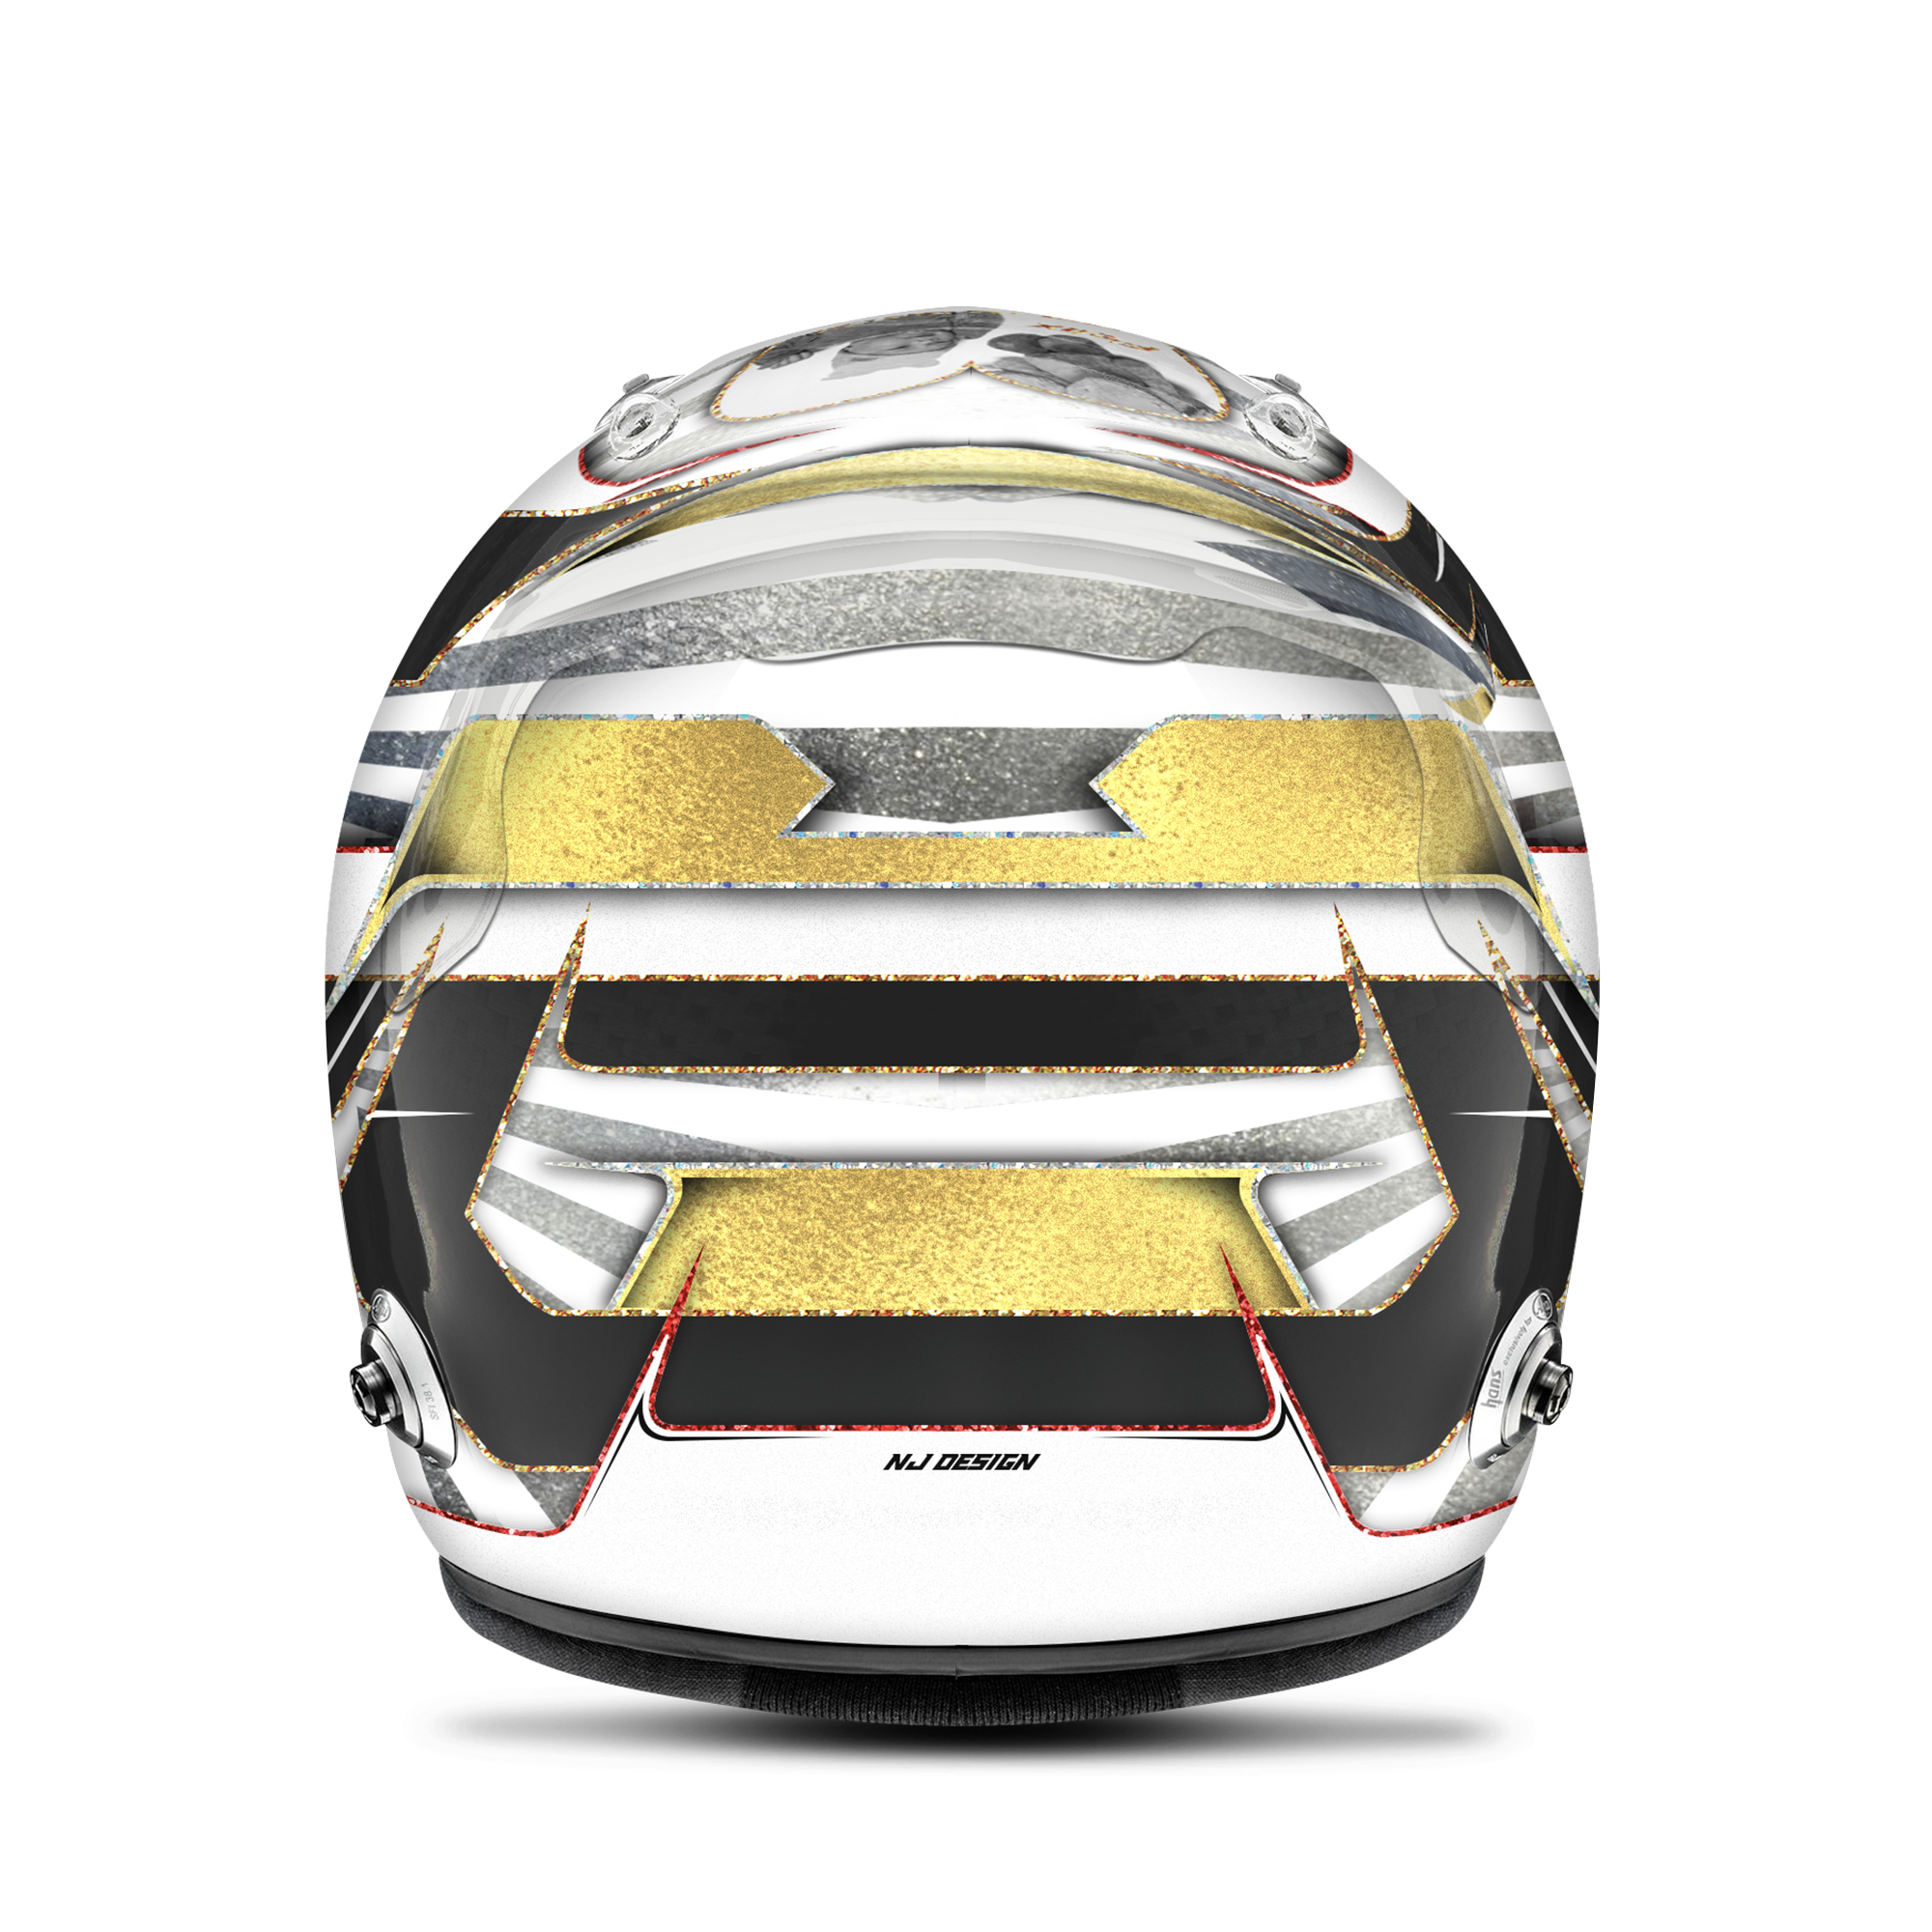 Nicolai Kristensen helmet design